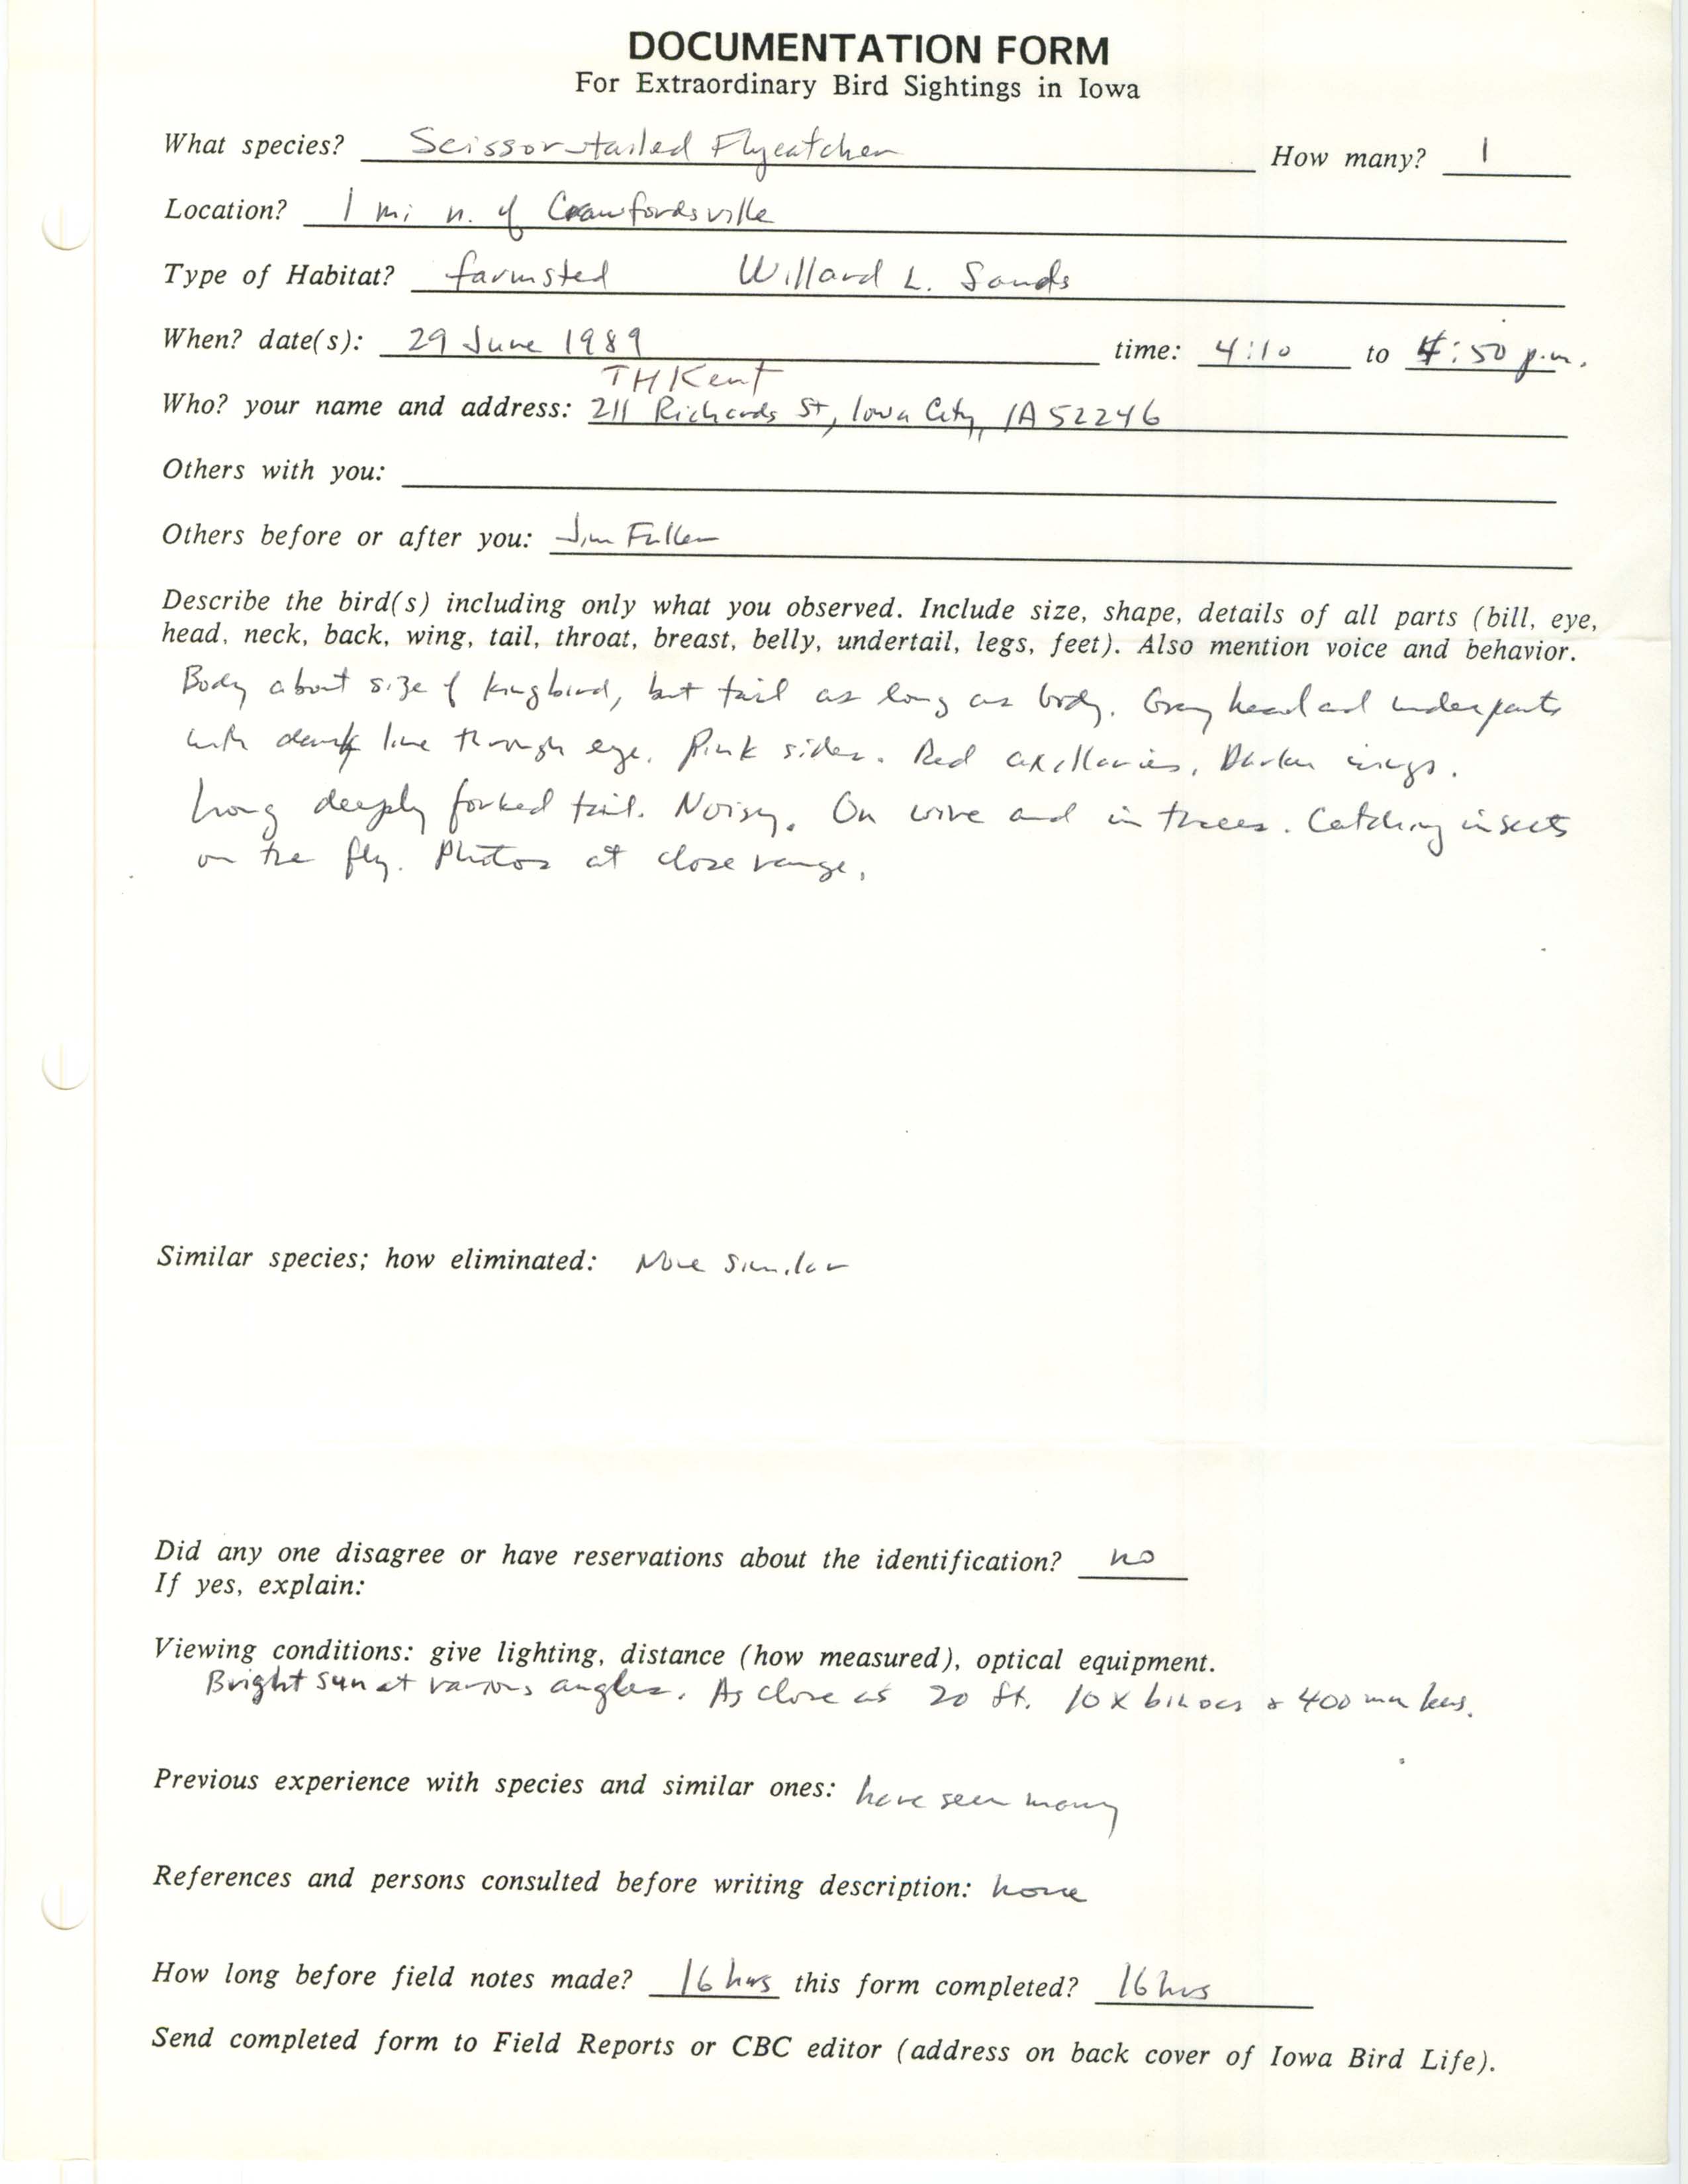 Rare bird documentation form for Scissor-tailed Flycatcher north of Crawfordsville in 1989